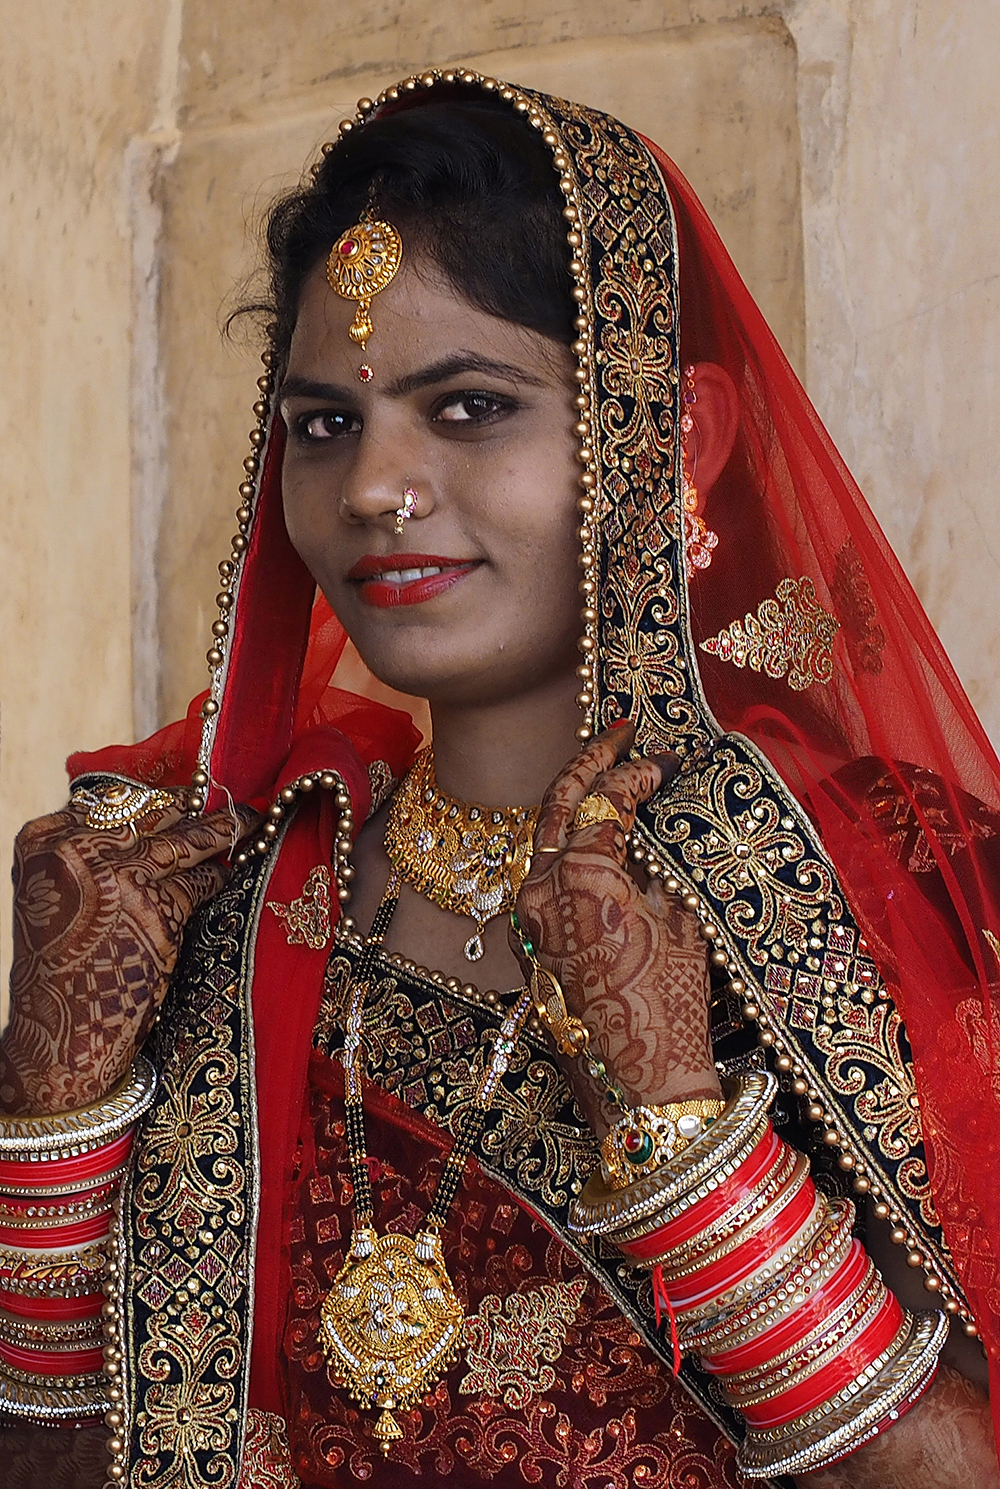 The Indian Bride, Nagaur Fort, Rajasthan, India, by Mike Longhurst